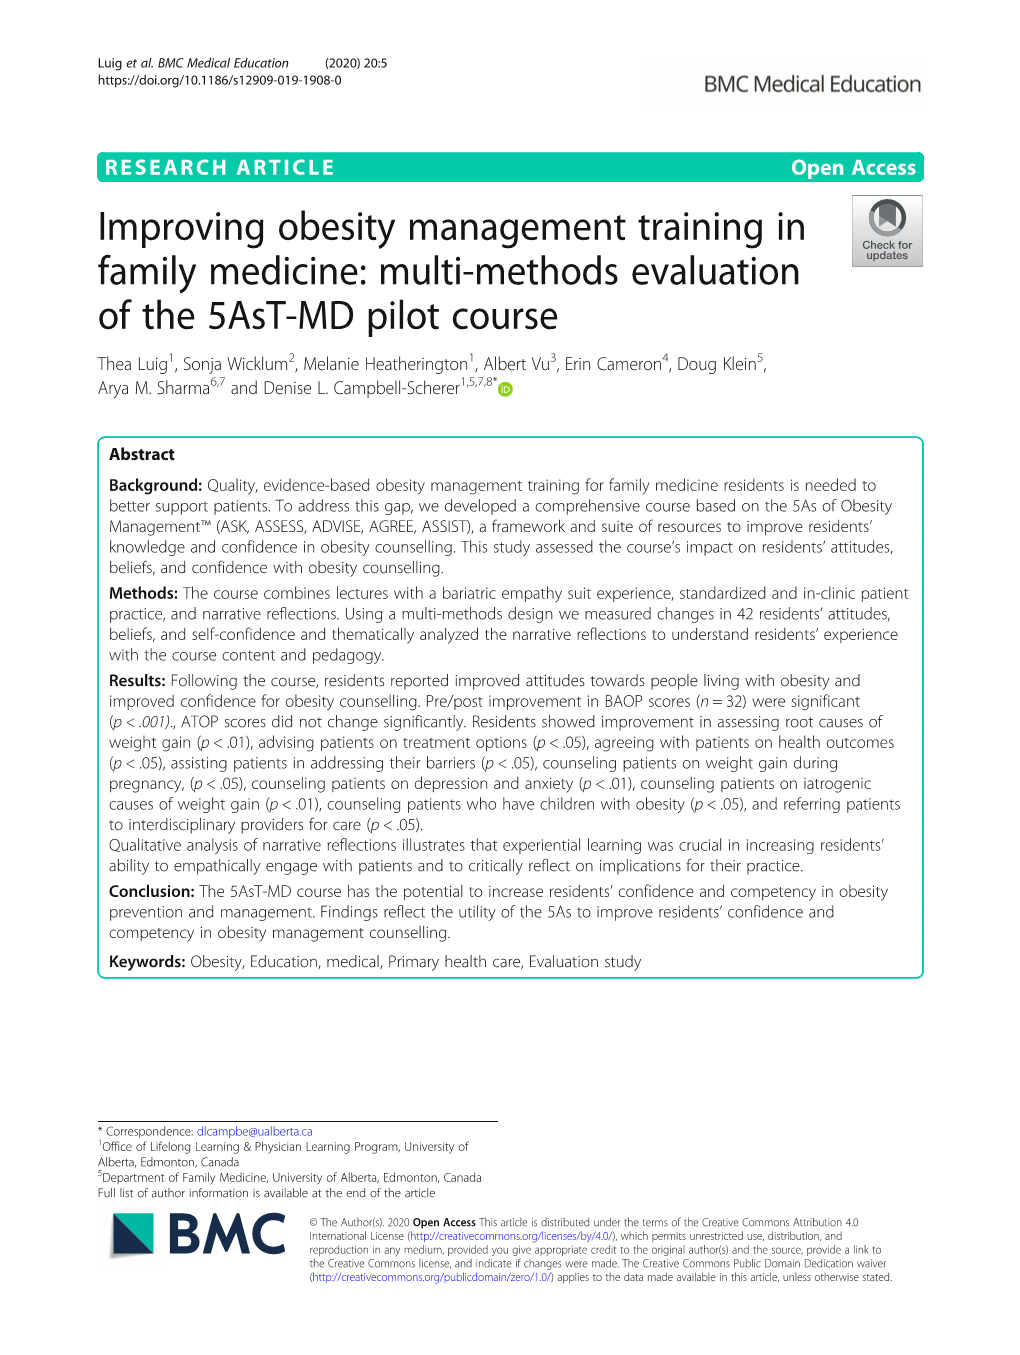 Improving Obesity Management Training in Family Medicine